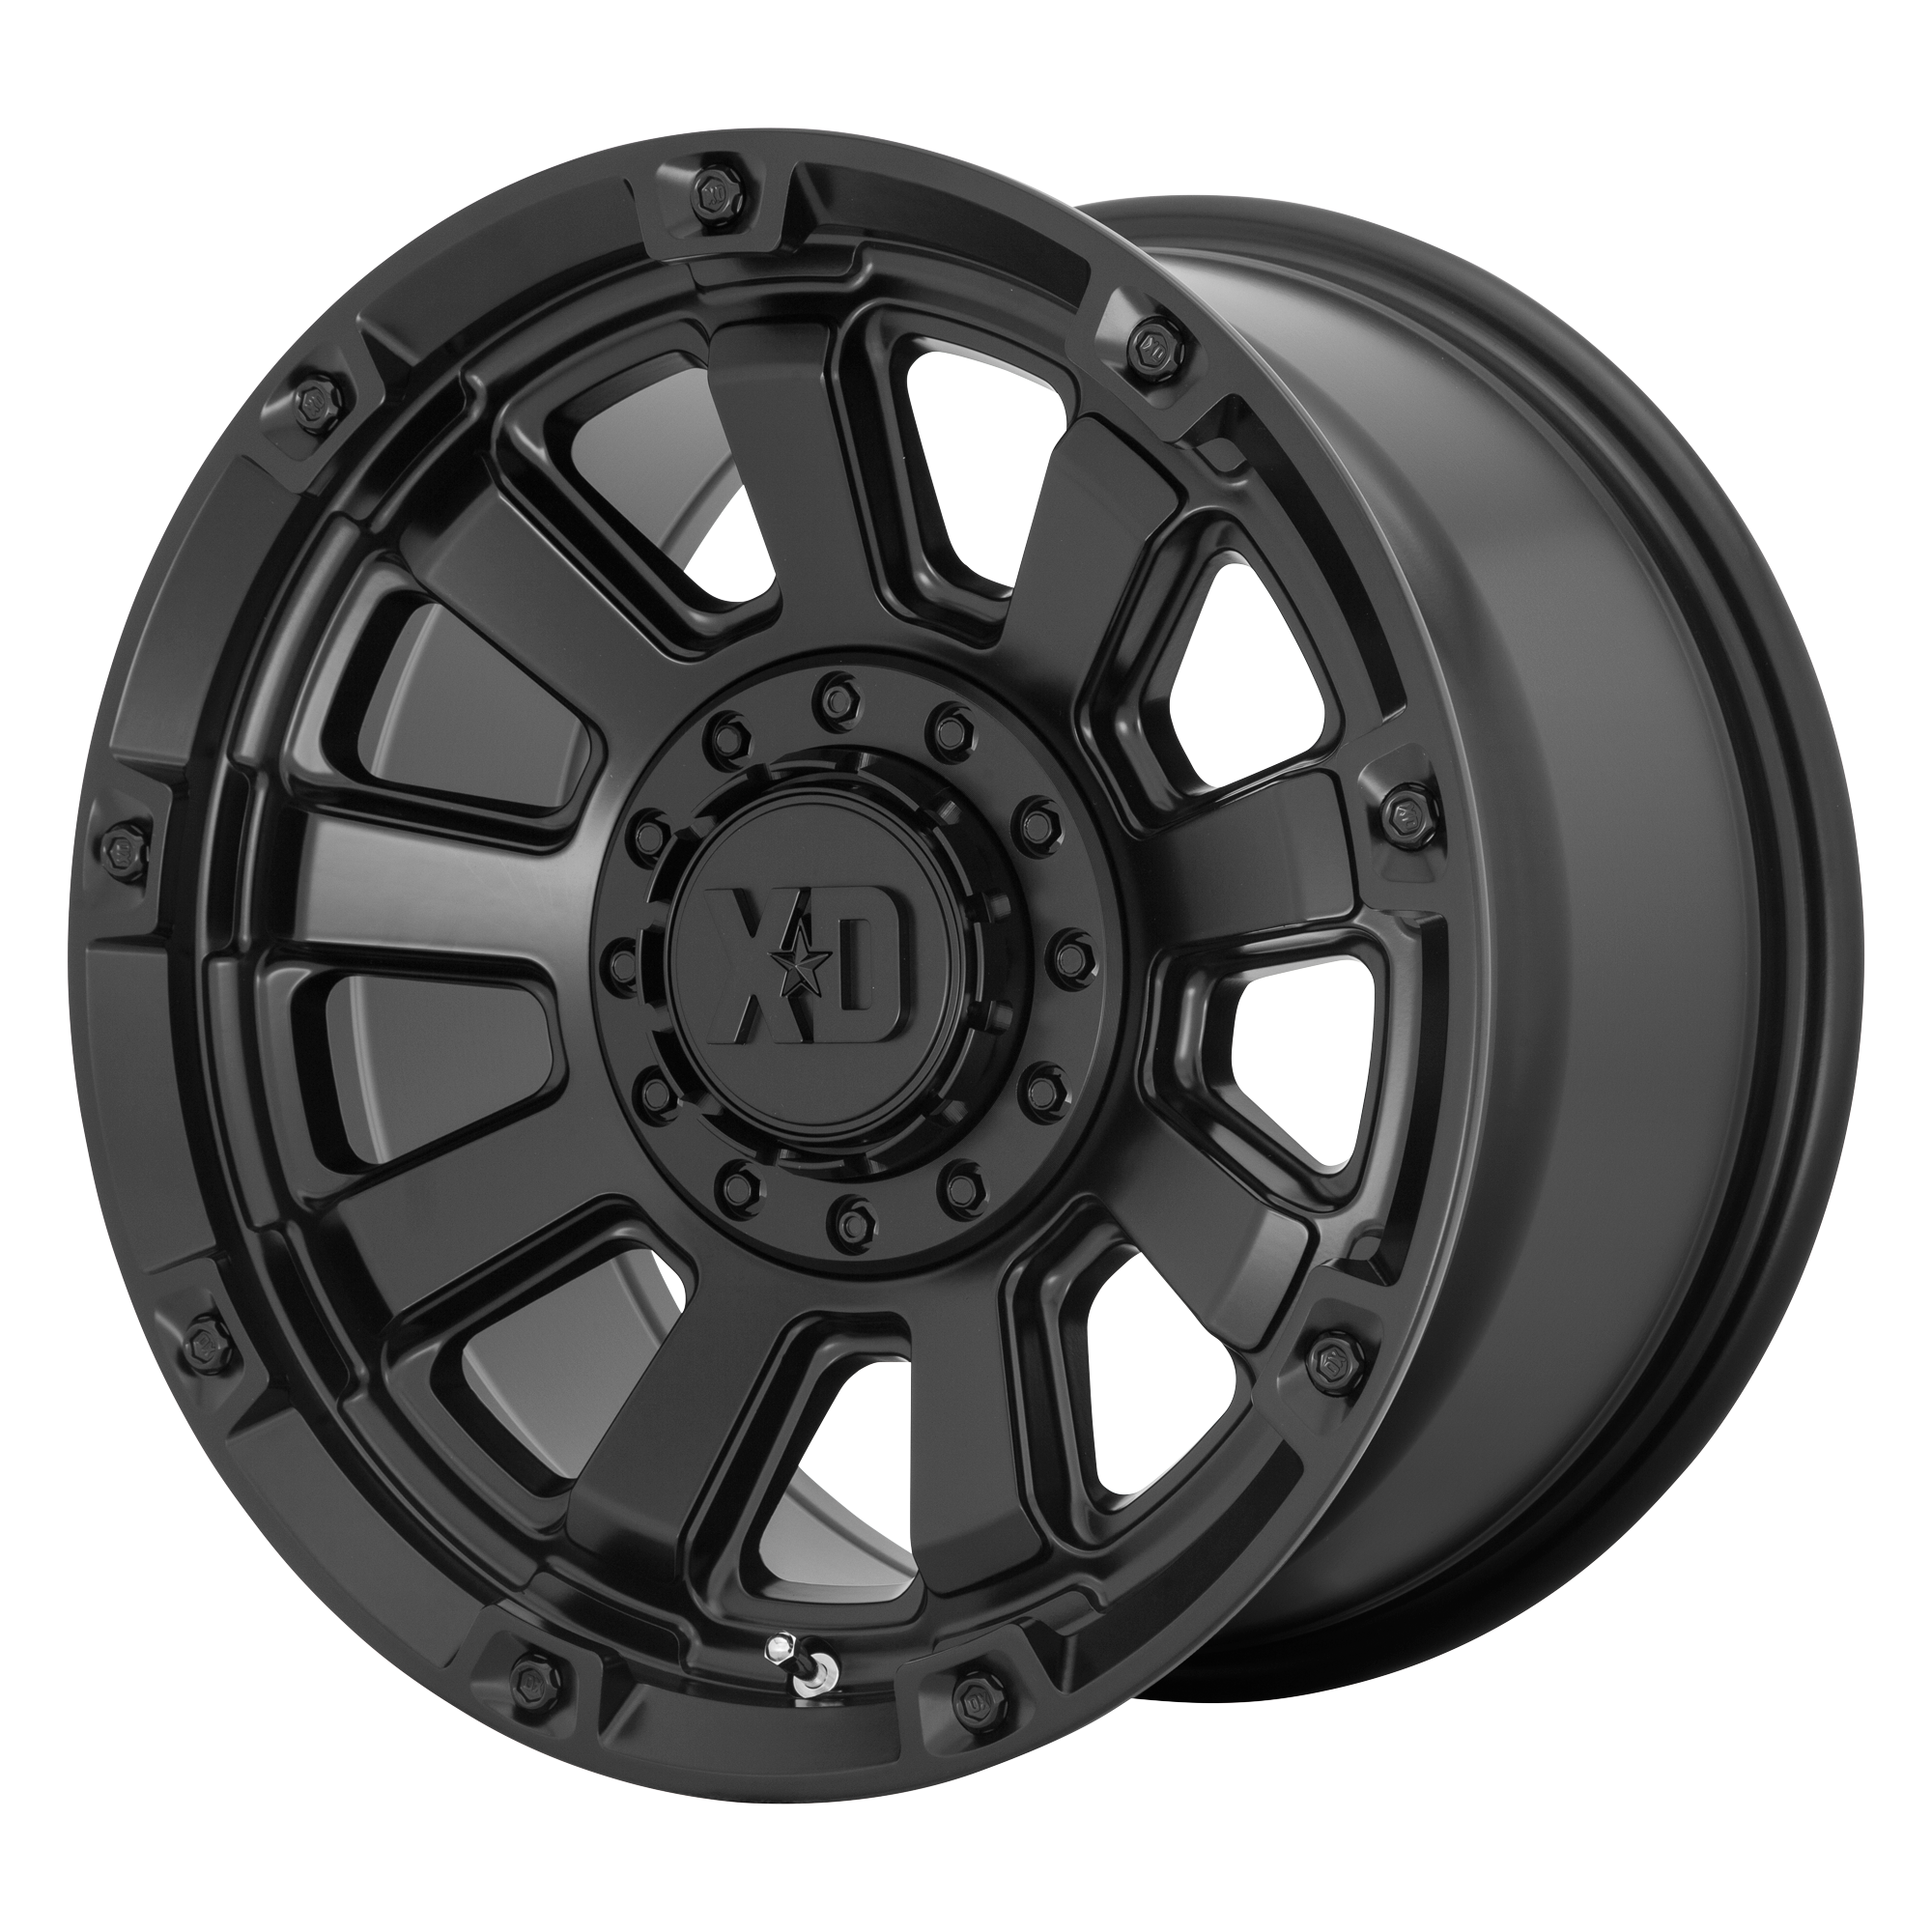 XD 20"x9" Non-Chrome Satin Black Custom Wheel ARSWCWXD85229087700